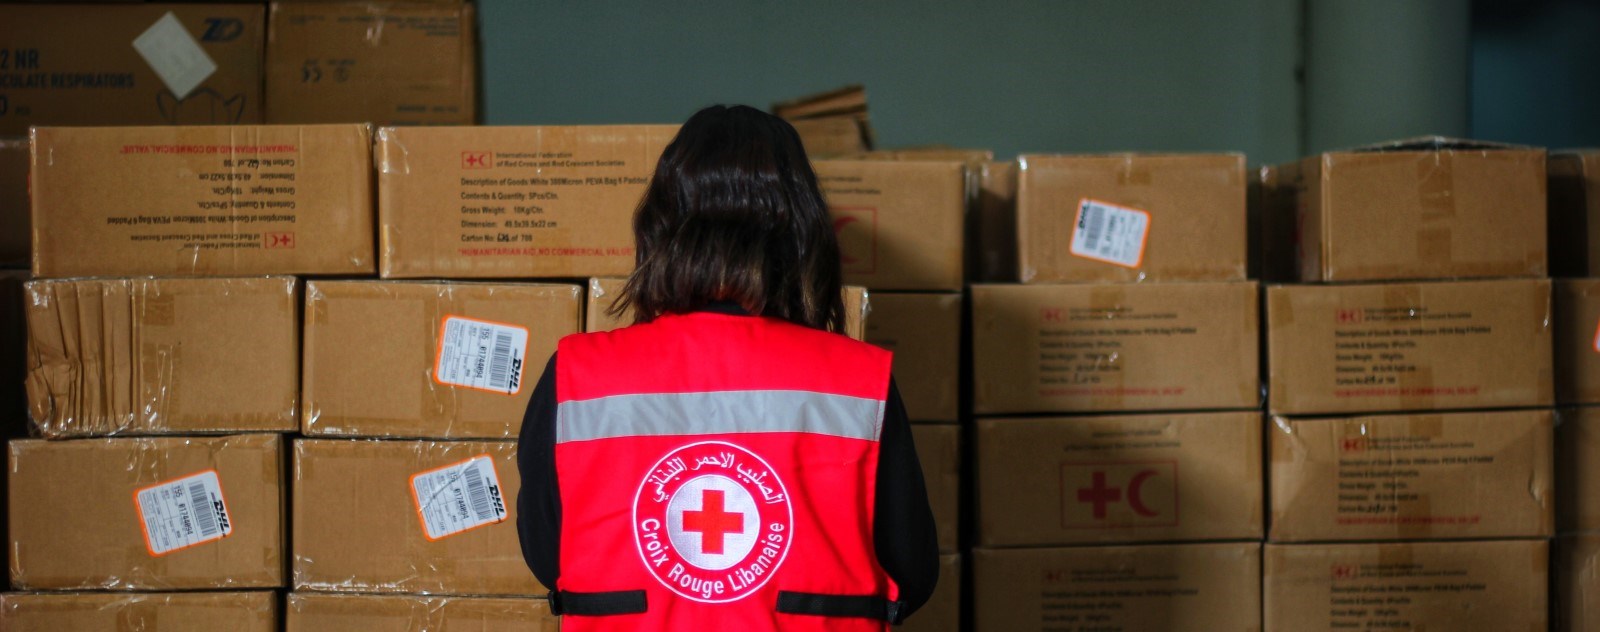 En kvinne med Røde Kors-vest står med rygget til og ser på en stabel med esker